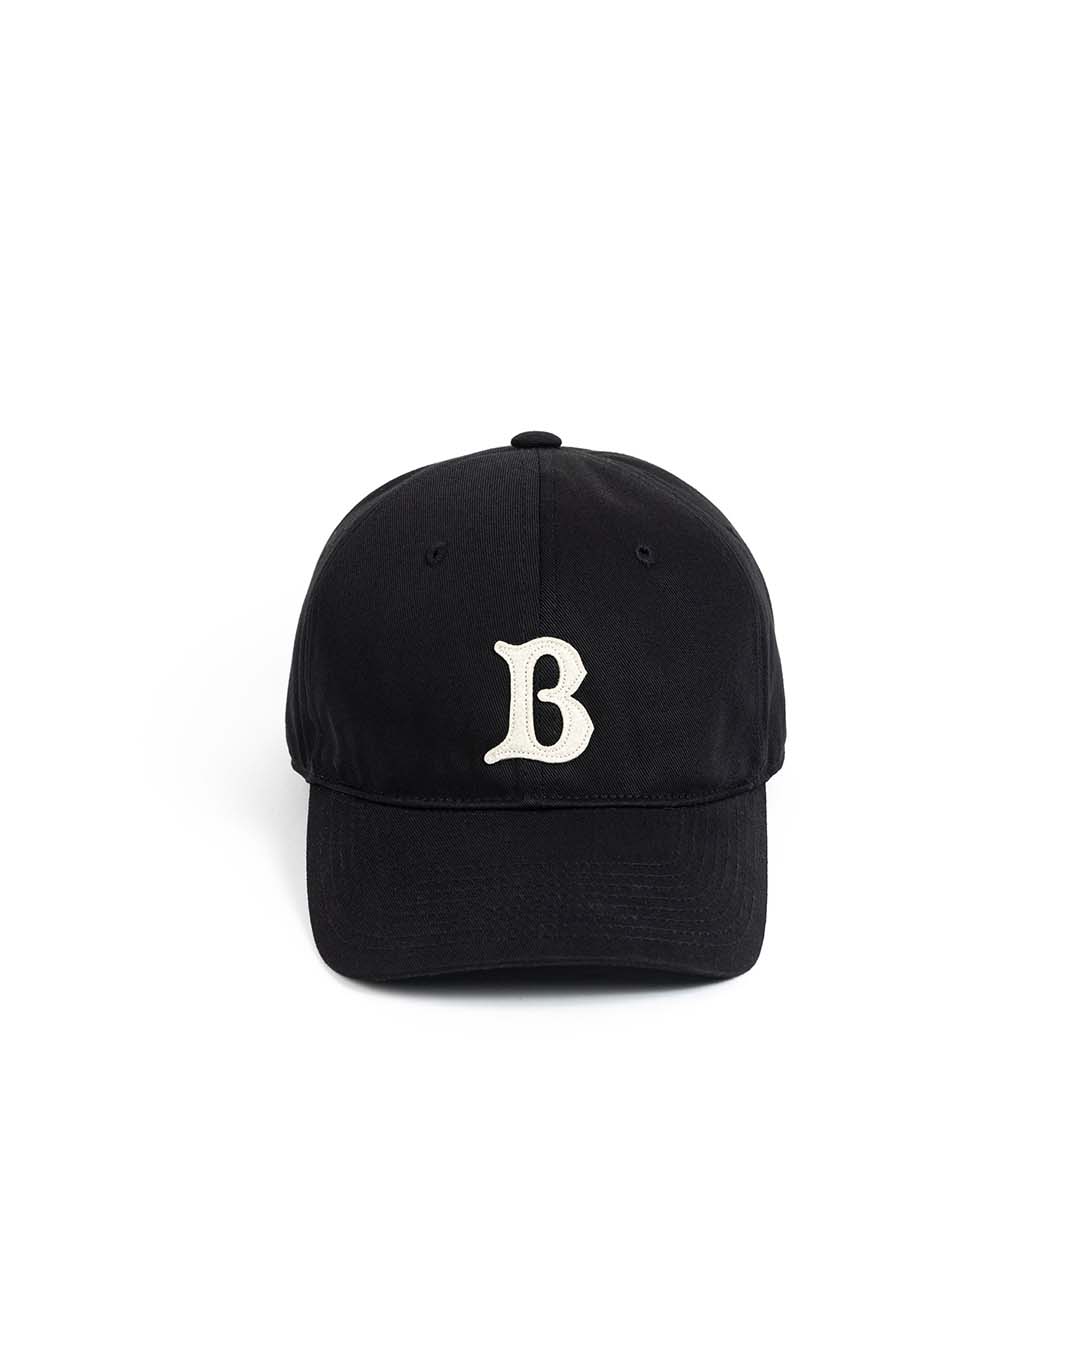 LB TWILL BASEBALL CAP (black)